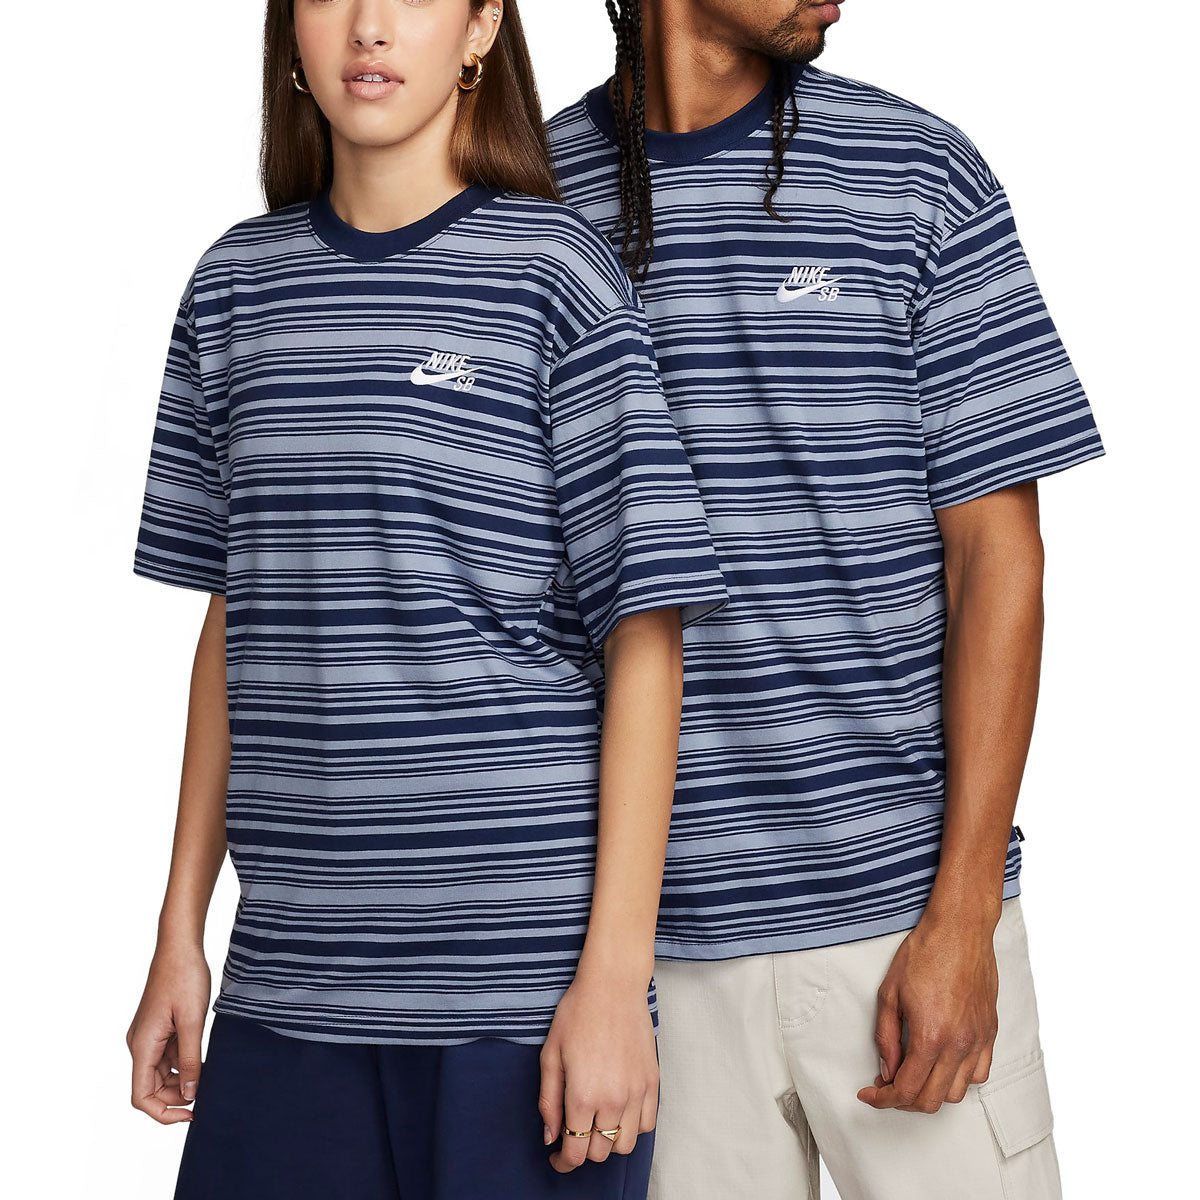 Nike SB Striped T-Shirt - Ashen Slate image 2